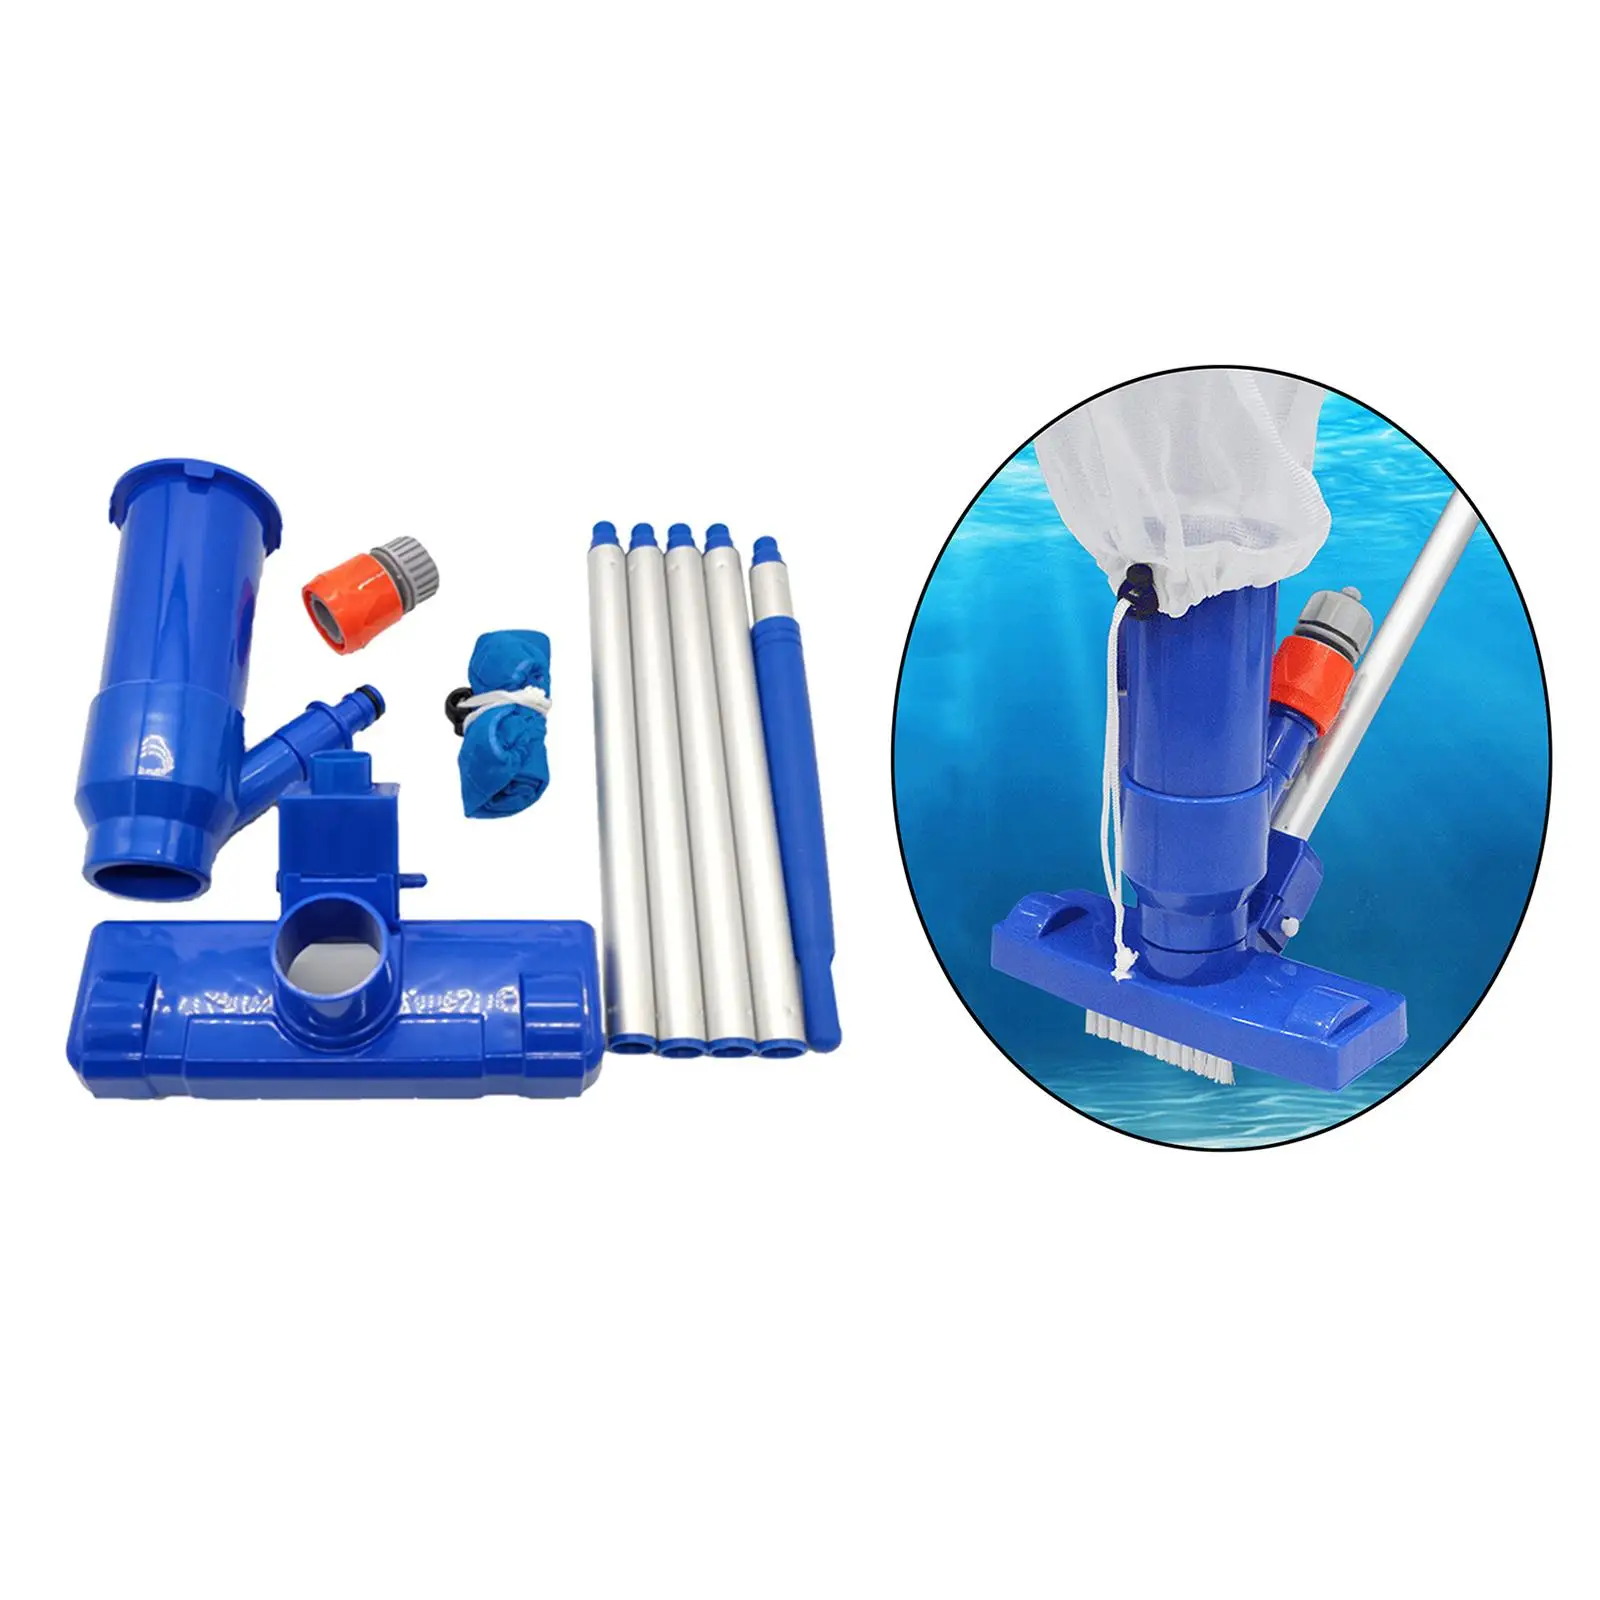 Cabezal de aspiradora de piscina con bolsa de filtro, limpiador para piscinas de tierra, suministros de limpieza de fuentes, enchufe estadounidense